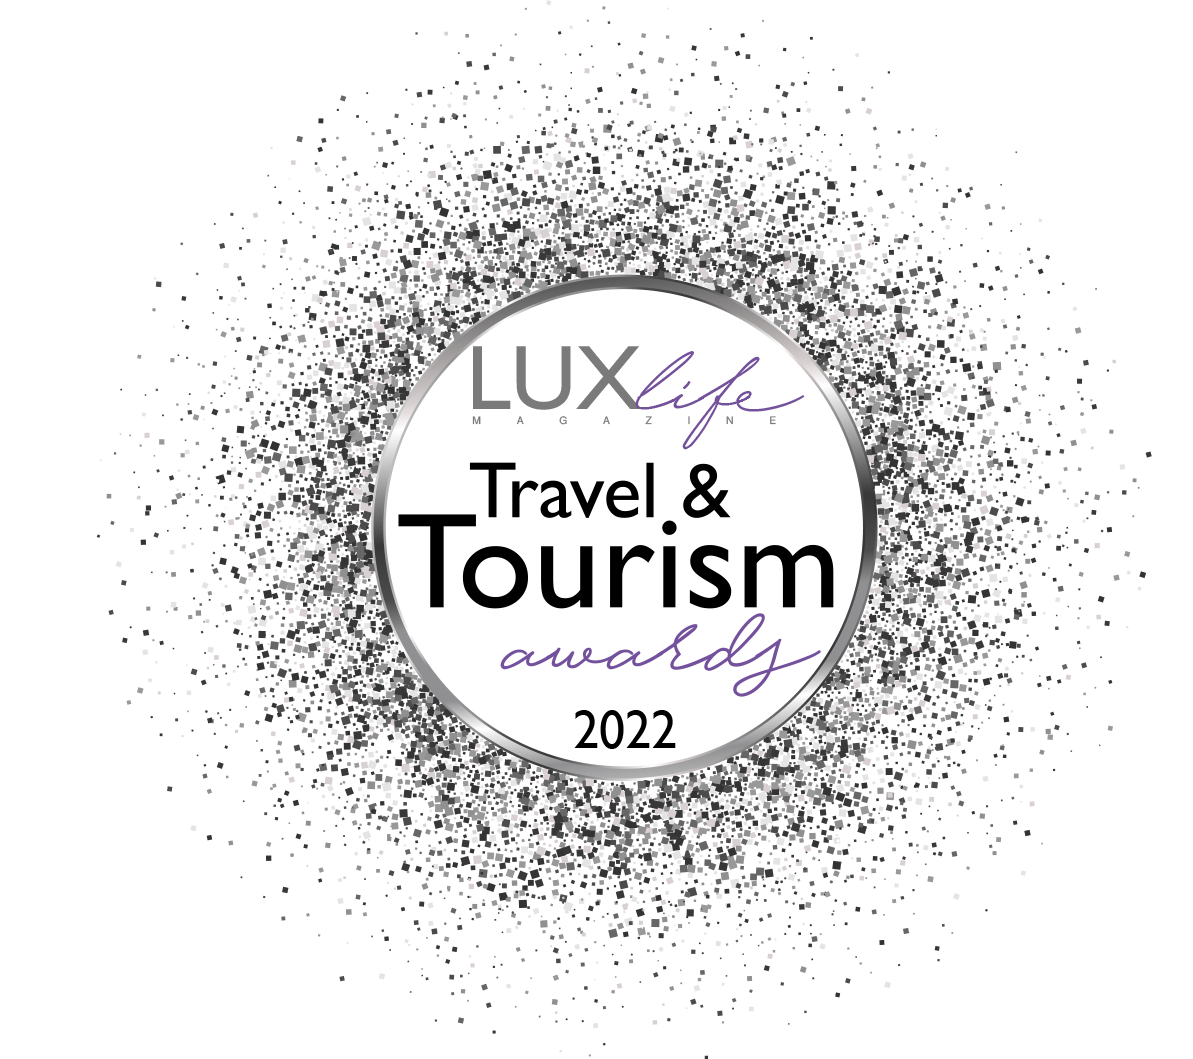 Lux Life Travel & Tourism awards 2022 logo